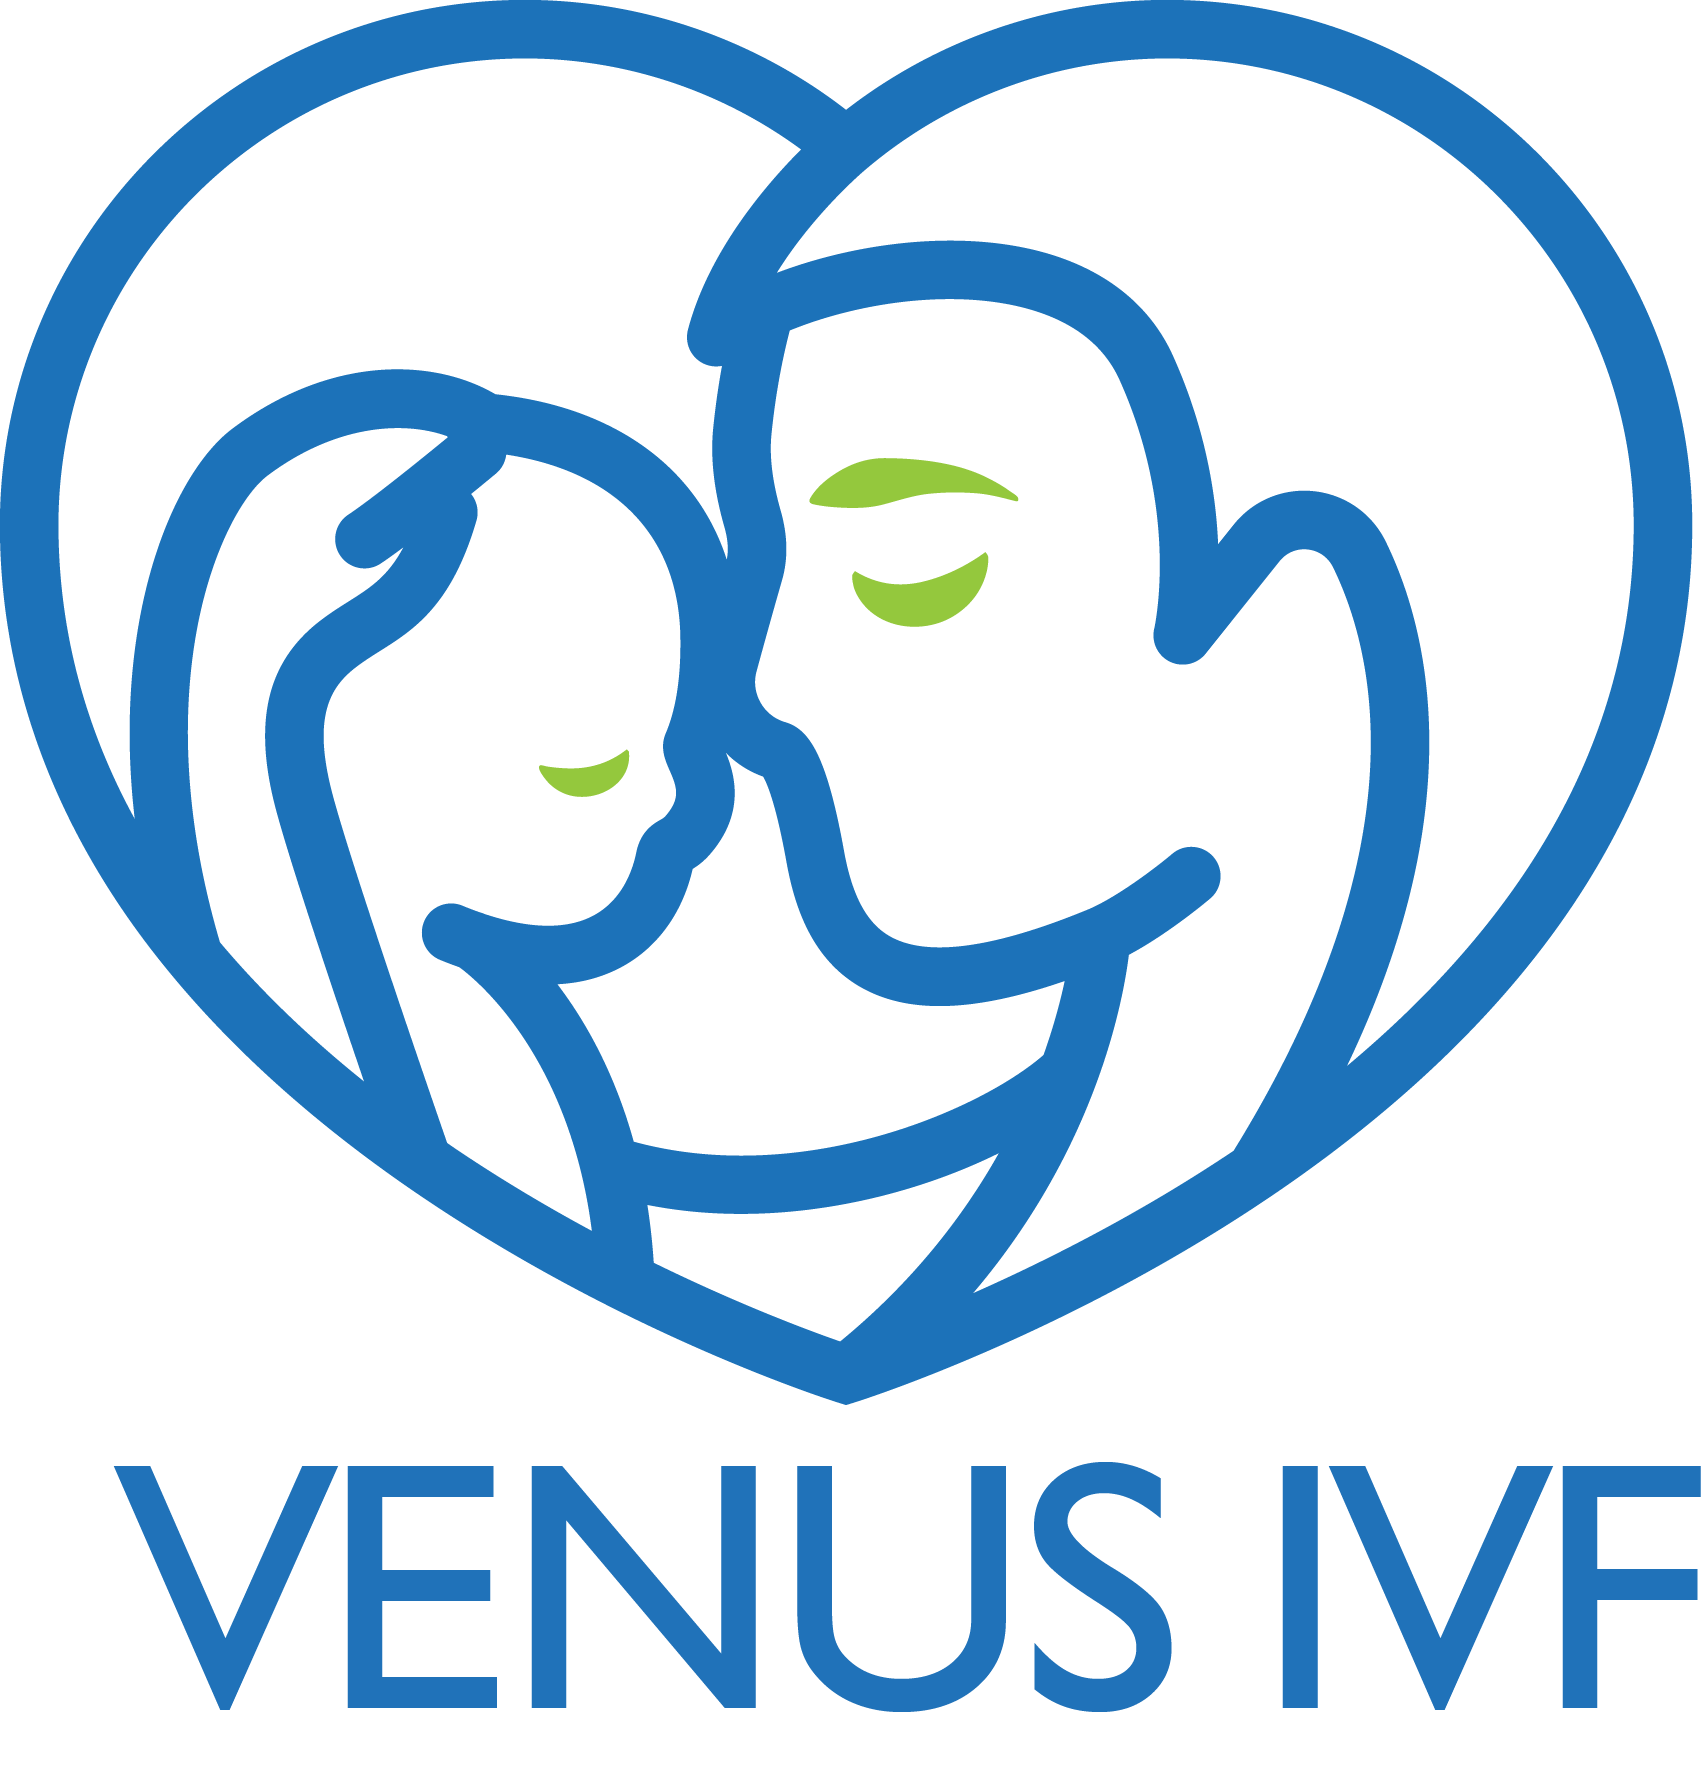 Venus ivf